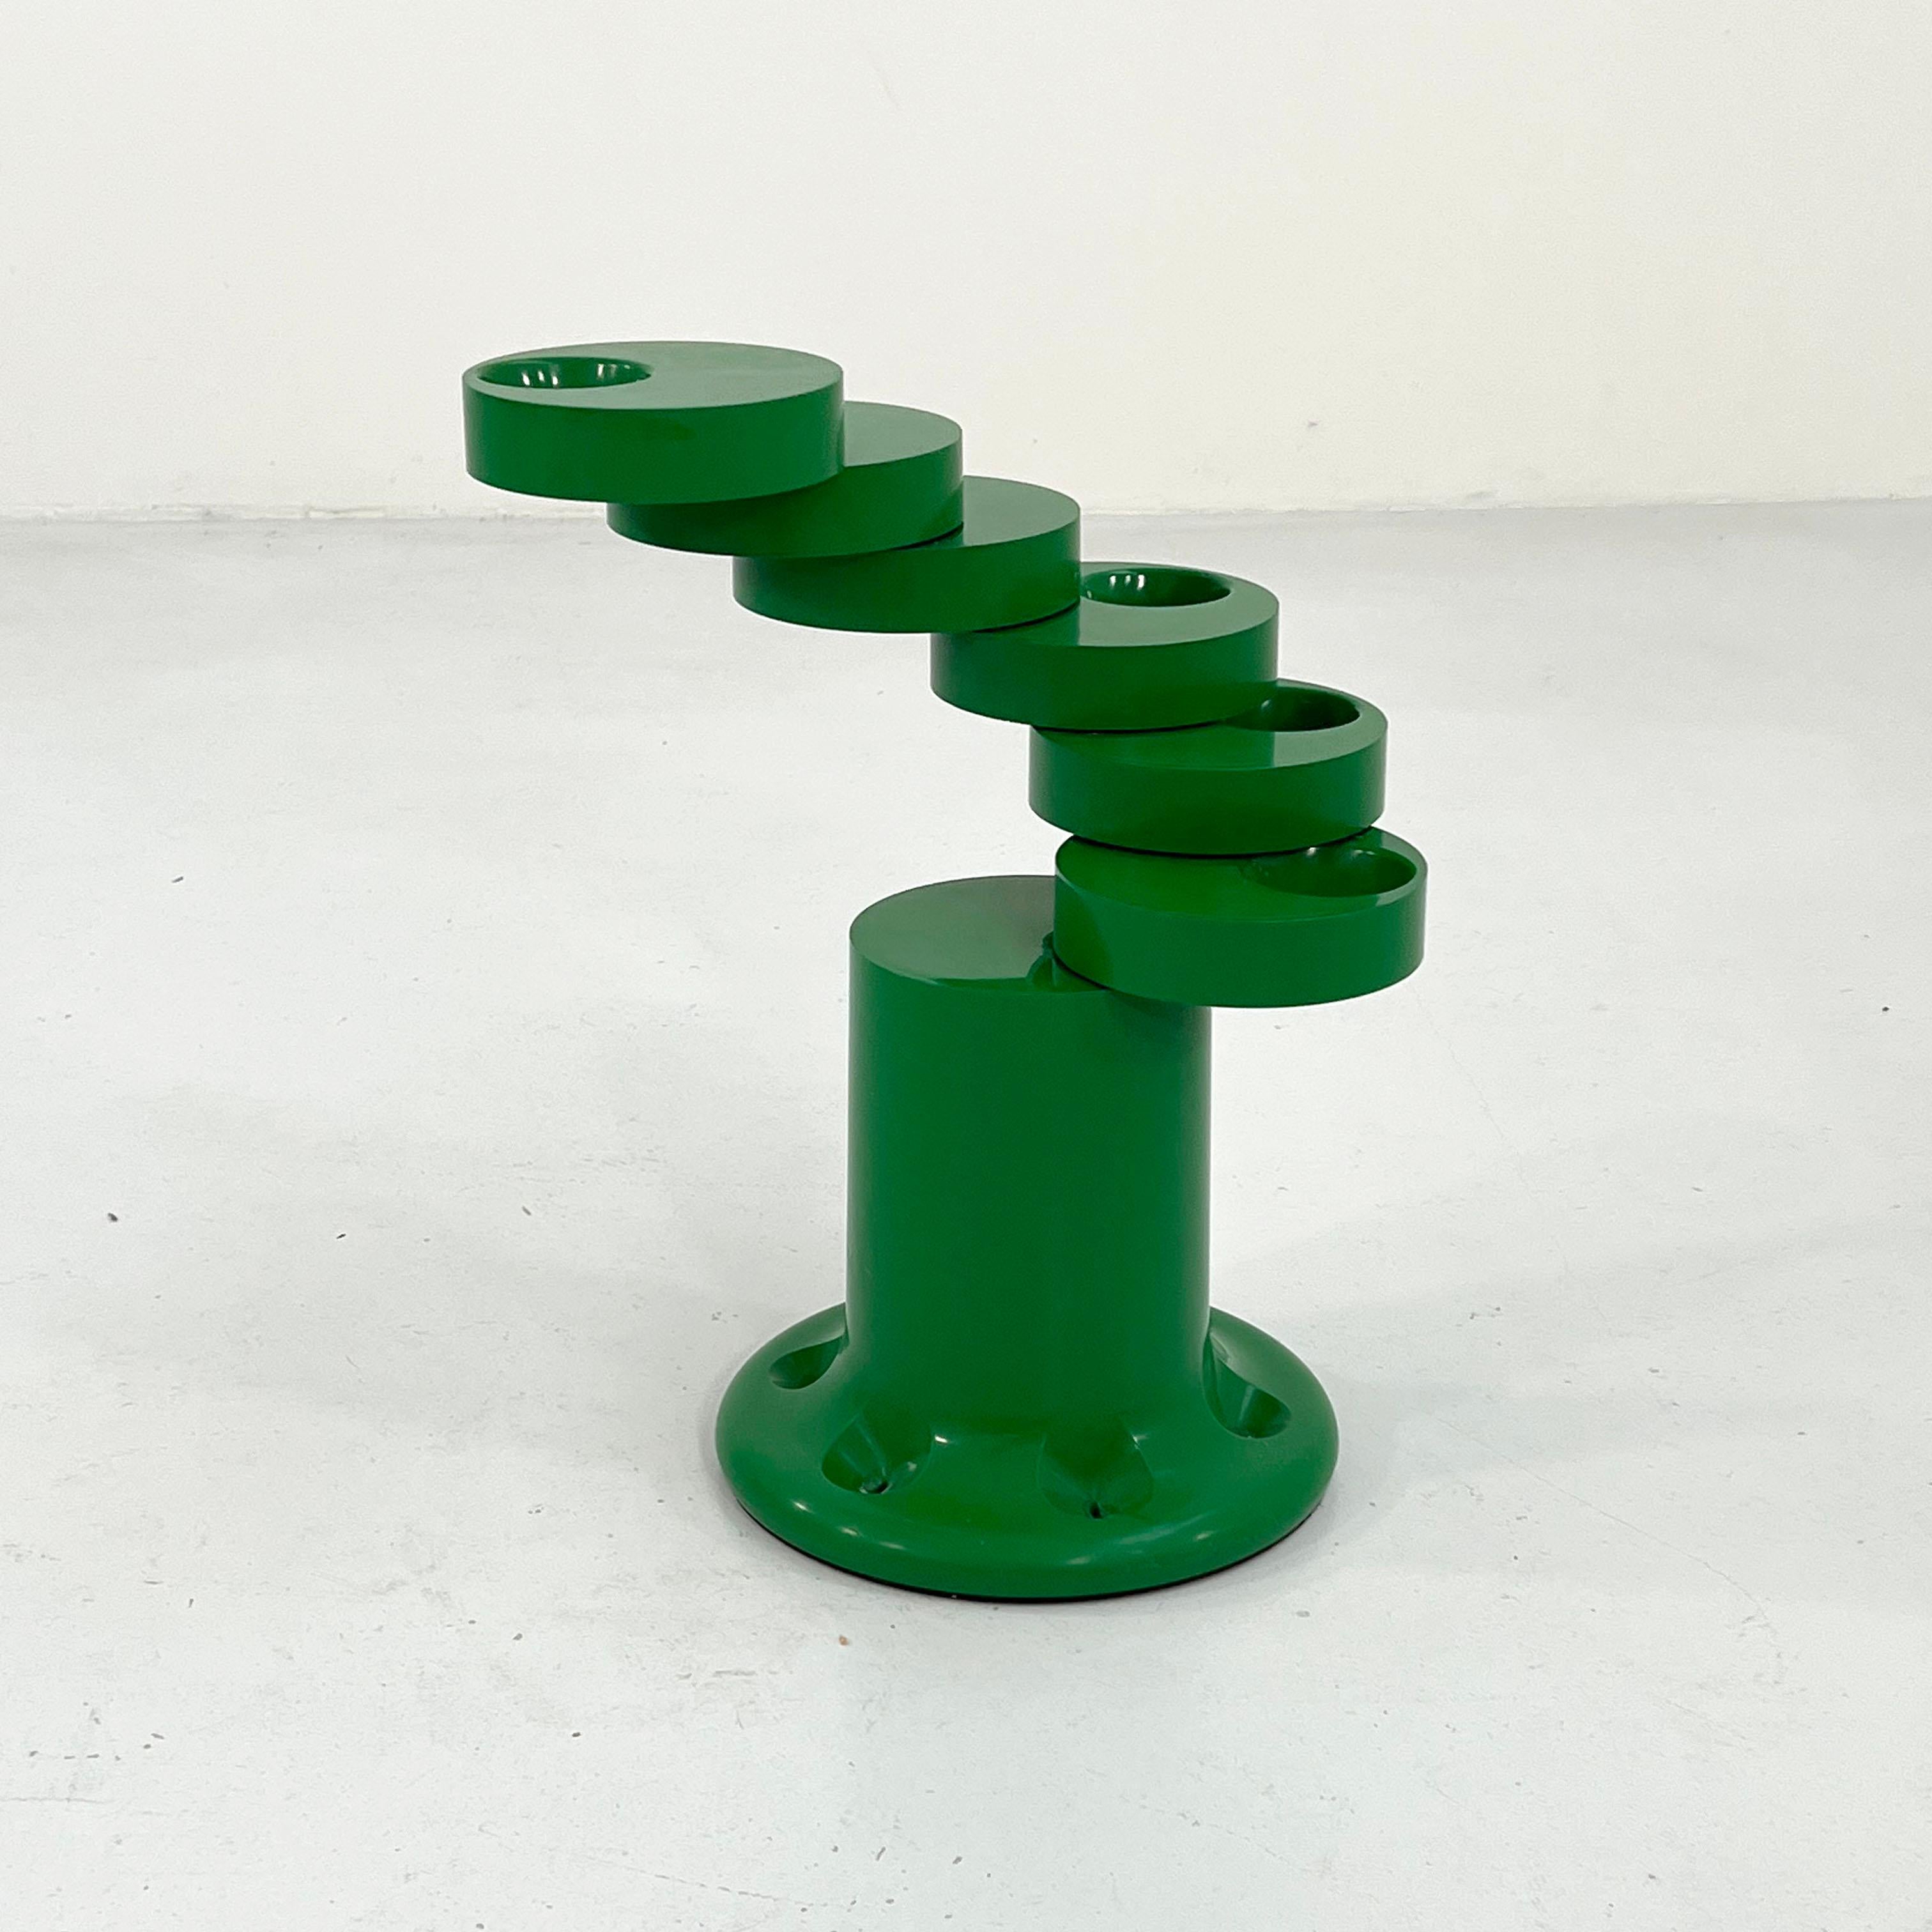 Designer - Giancarlo Piretti
Producer - Anonima Castelli
Model - Pluvium Umbrella Stand
Design Period - Seventies
Measurements - Width 30 cm x Depth 30 cm x Height 50 cm
Materials - Metal, Plastic
Color - Green
Light consistent with age and use. One